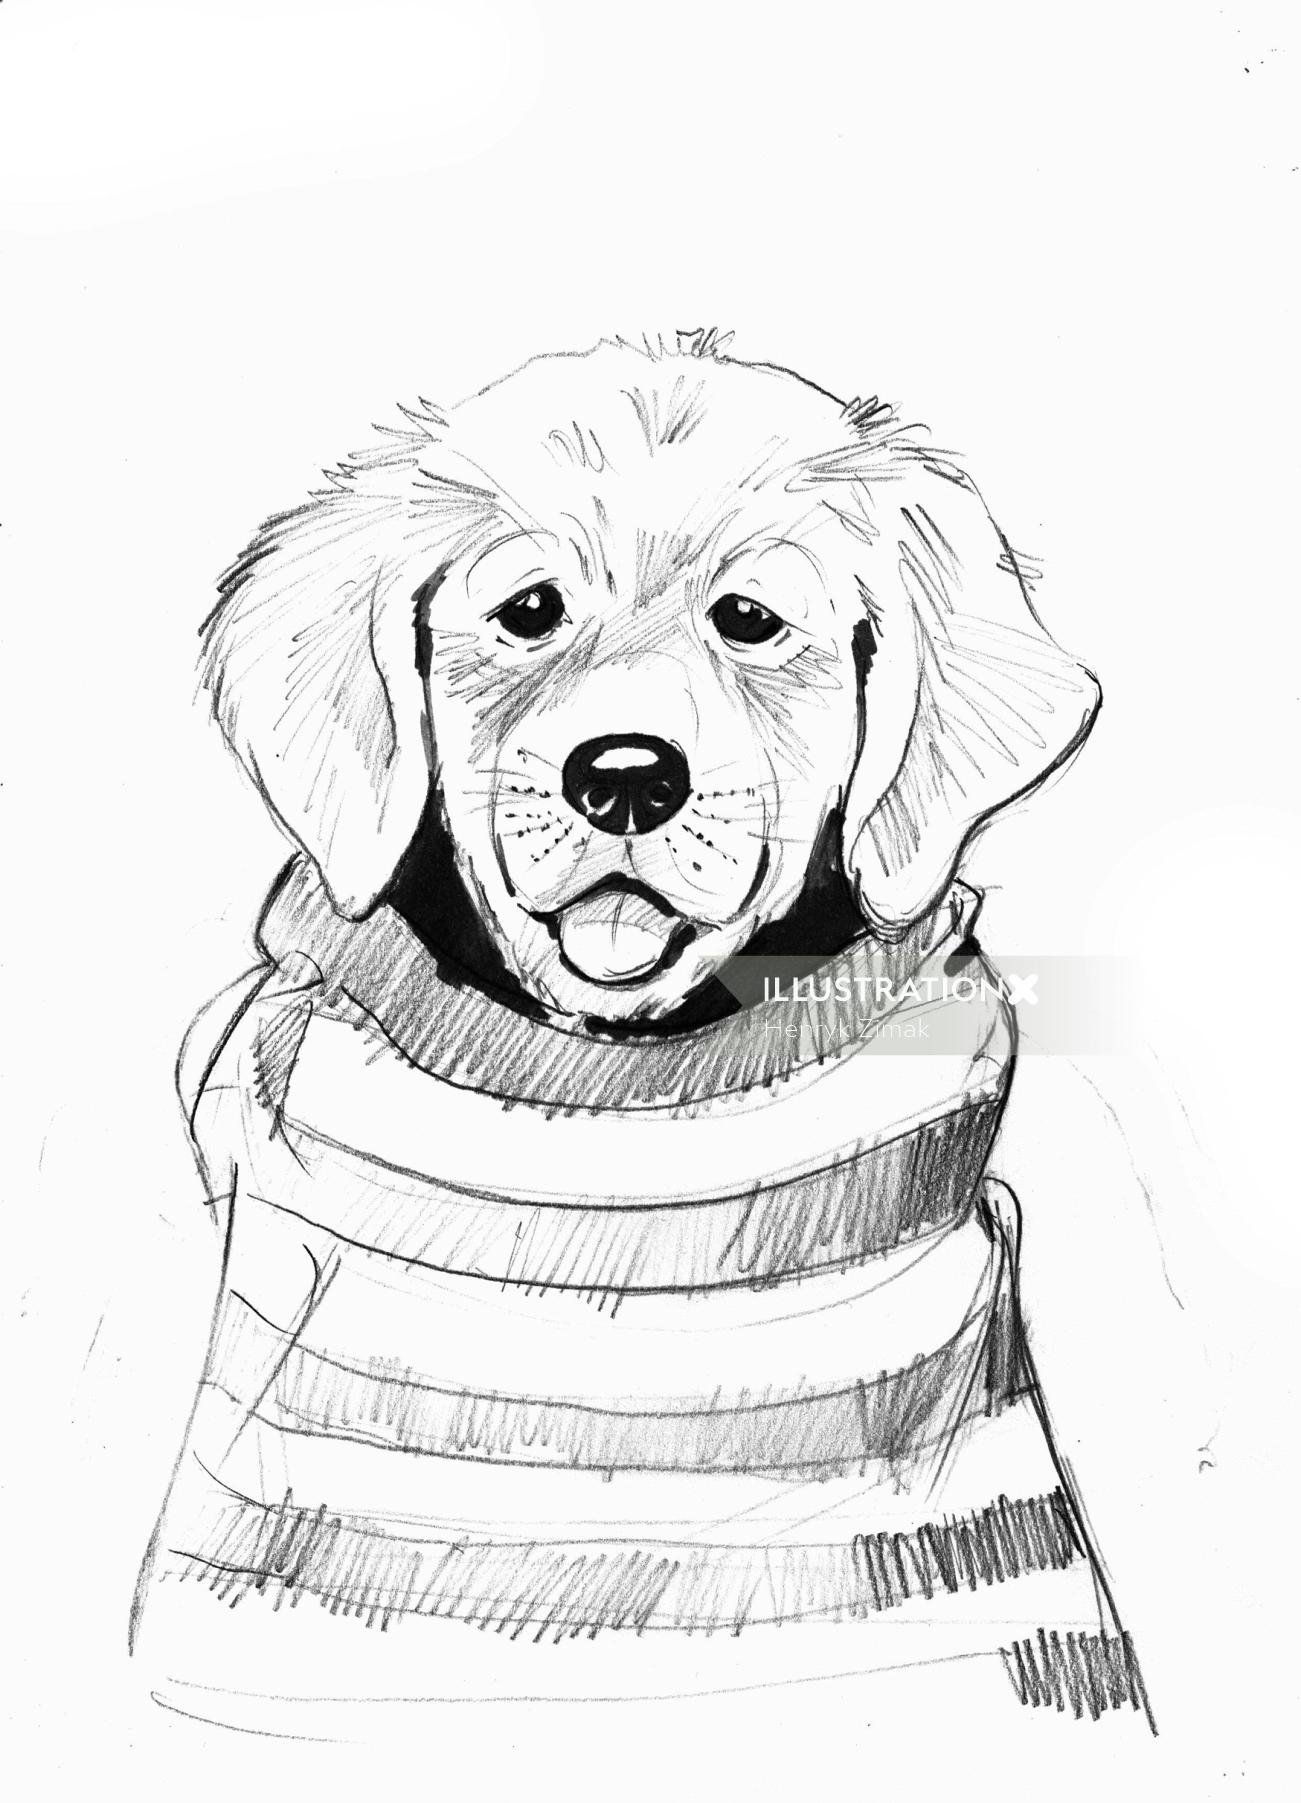 Sketch art of puppy dog 